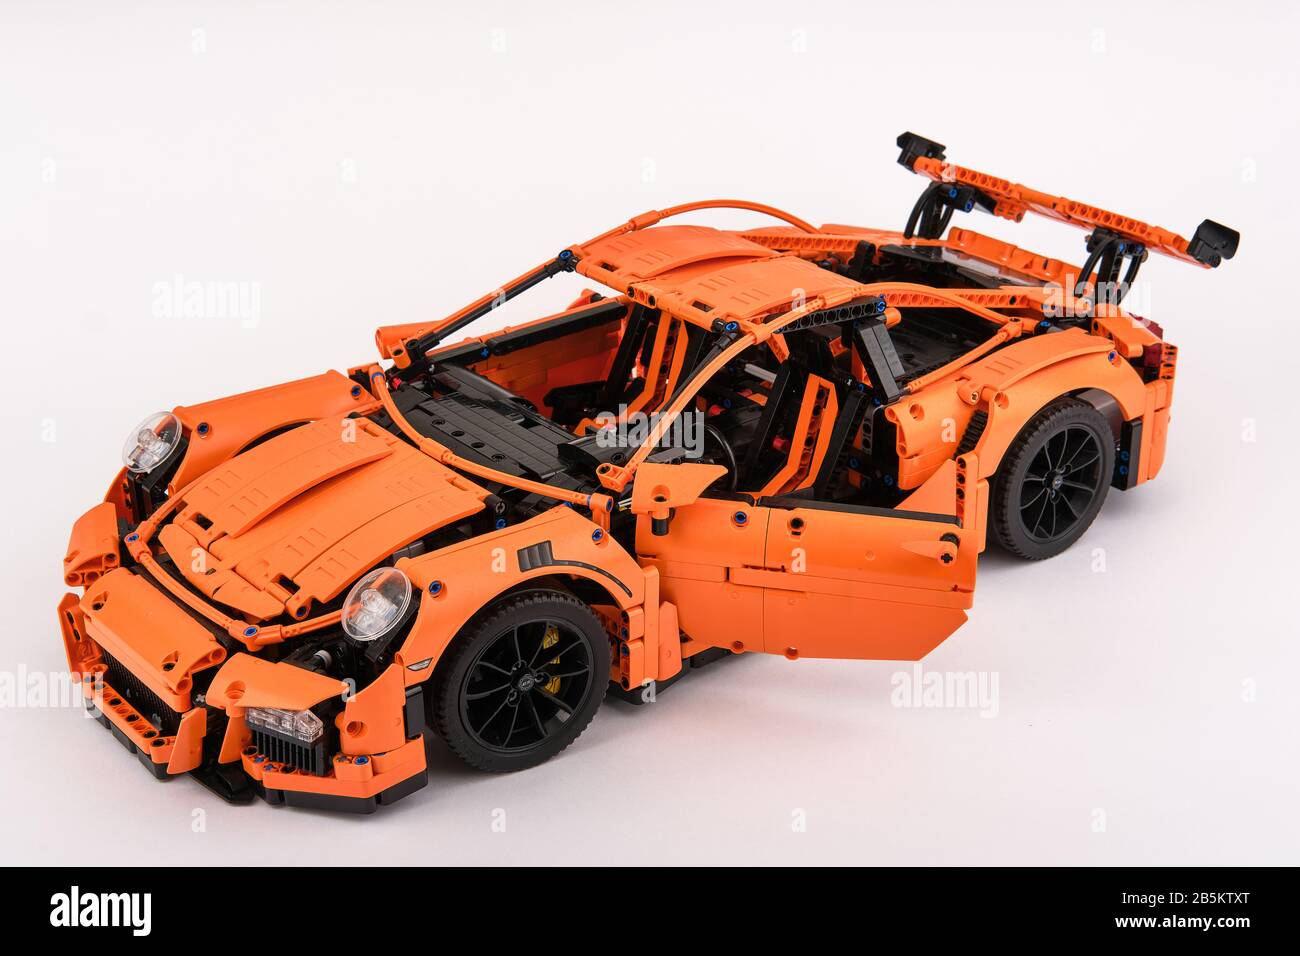 Different views of assembled orange lego Porsche GT 3RS car Stock Photo -  Alamy